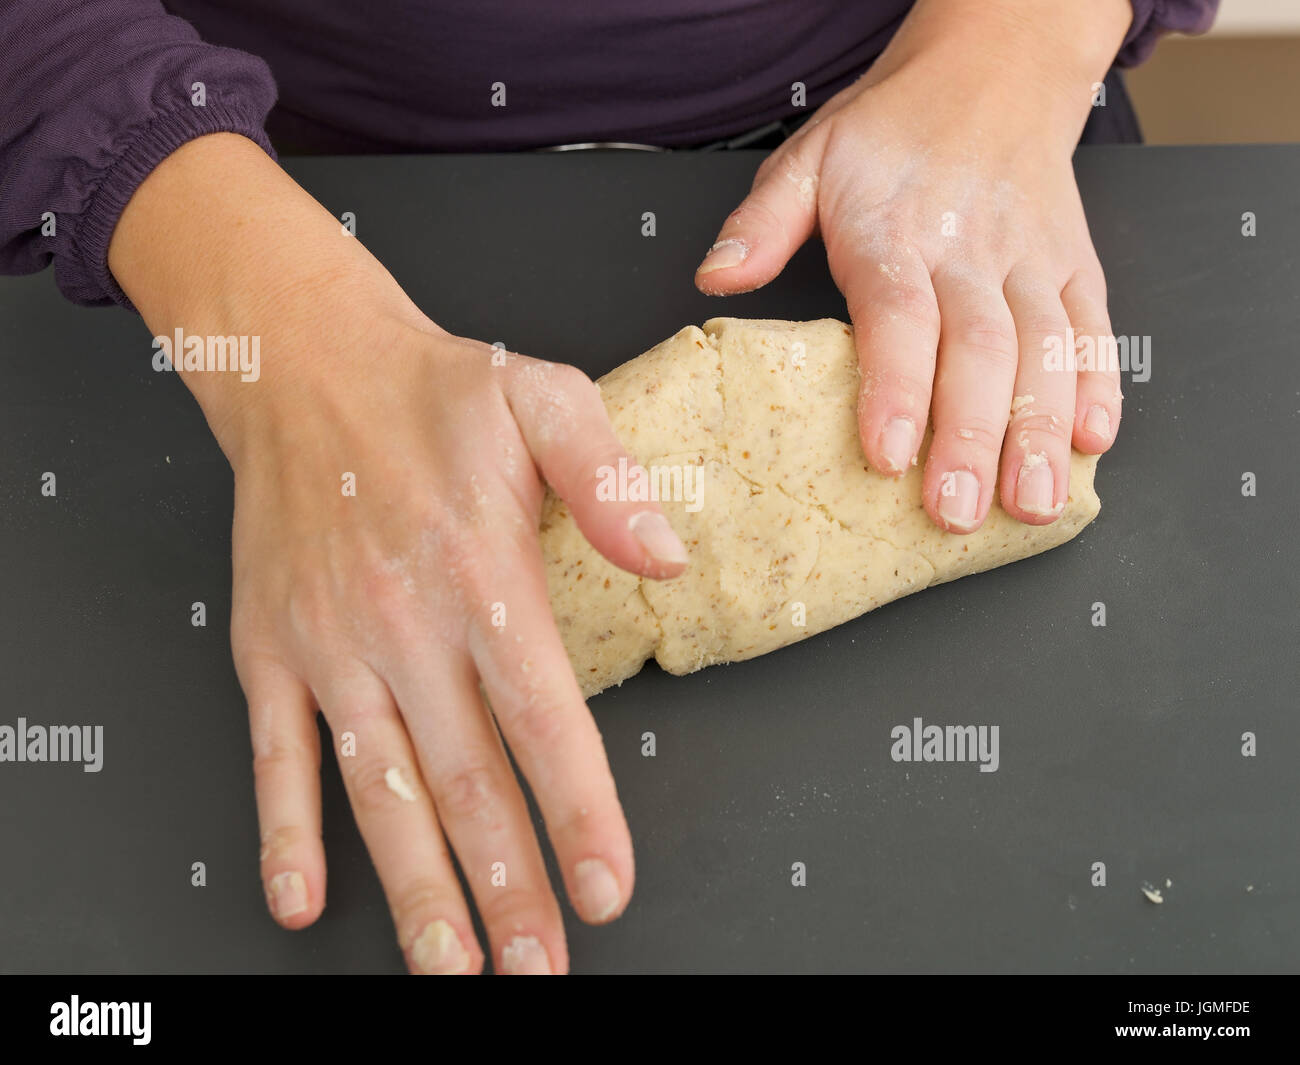 Woman prepares a biscuit dough - Woman confects a batter, Frau bereitet einen Keksteig zu - Woman confects a batter Stock Photo